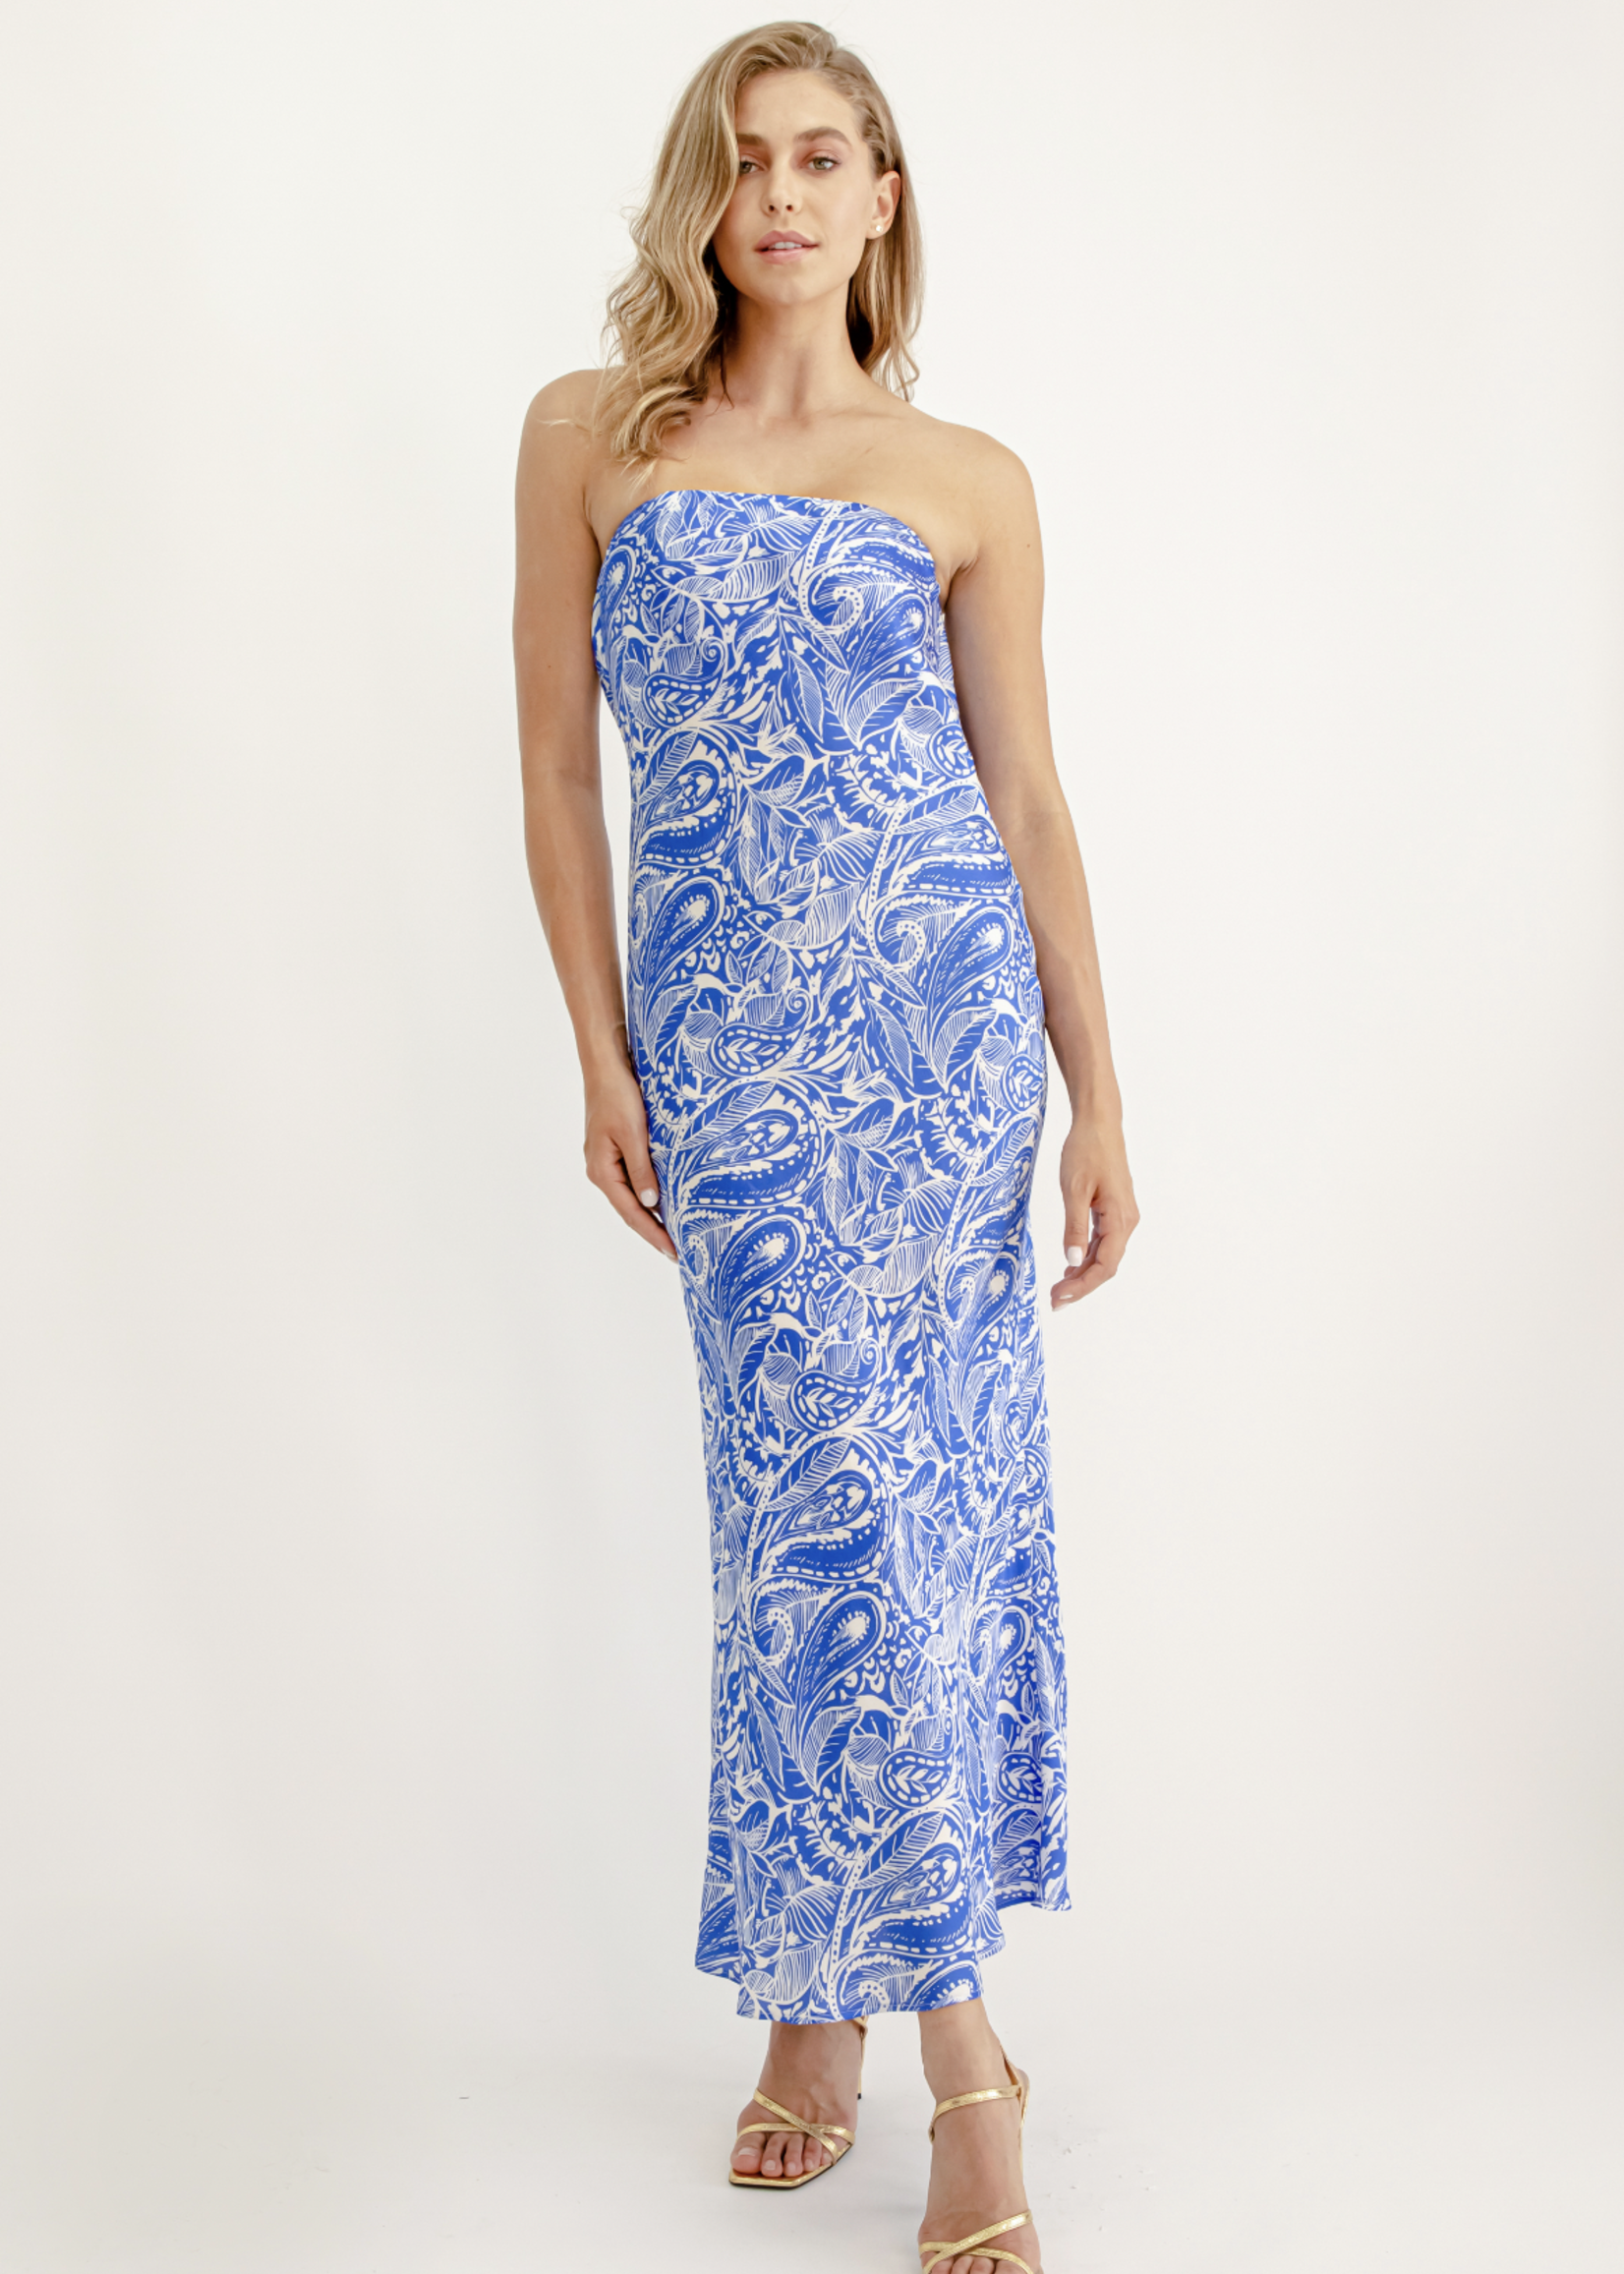 Elitaire Boutique Talia Maxi Dress in Blue